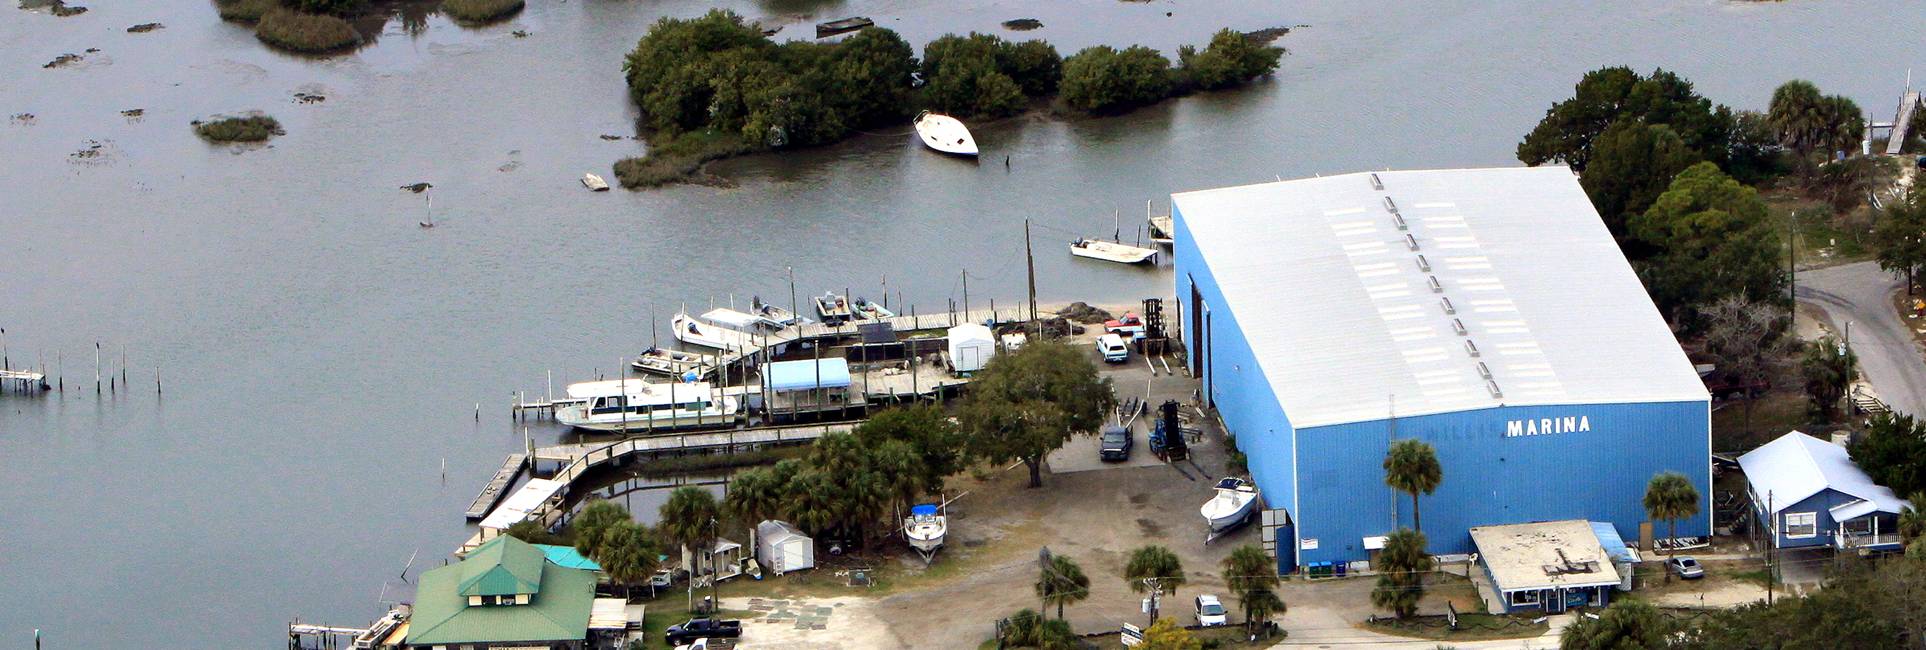 Cedar Key Marina II, Inc. in Cedar Key, FL